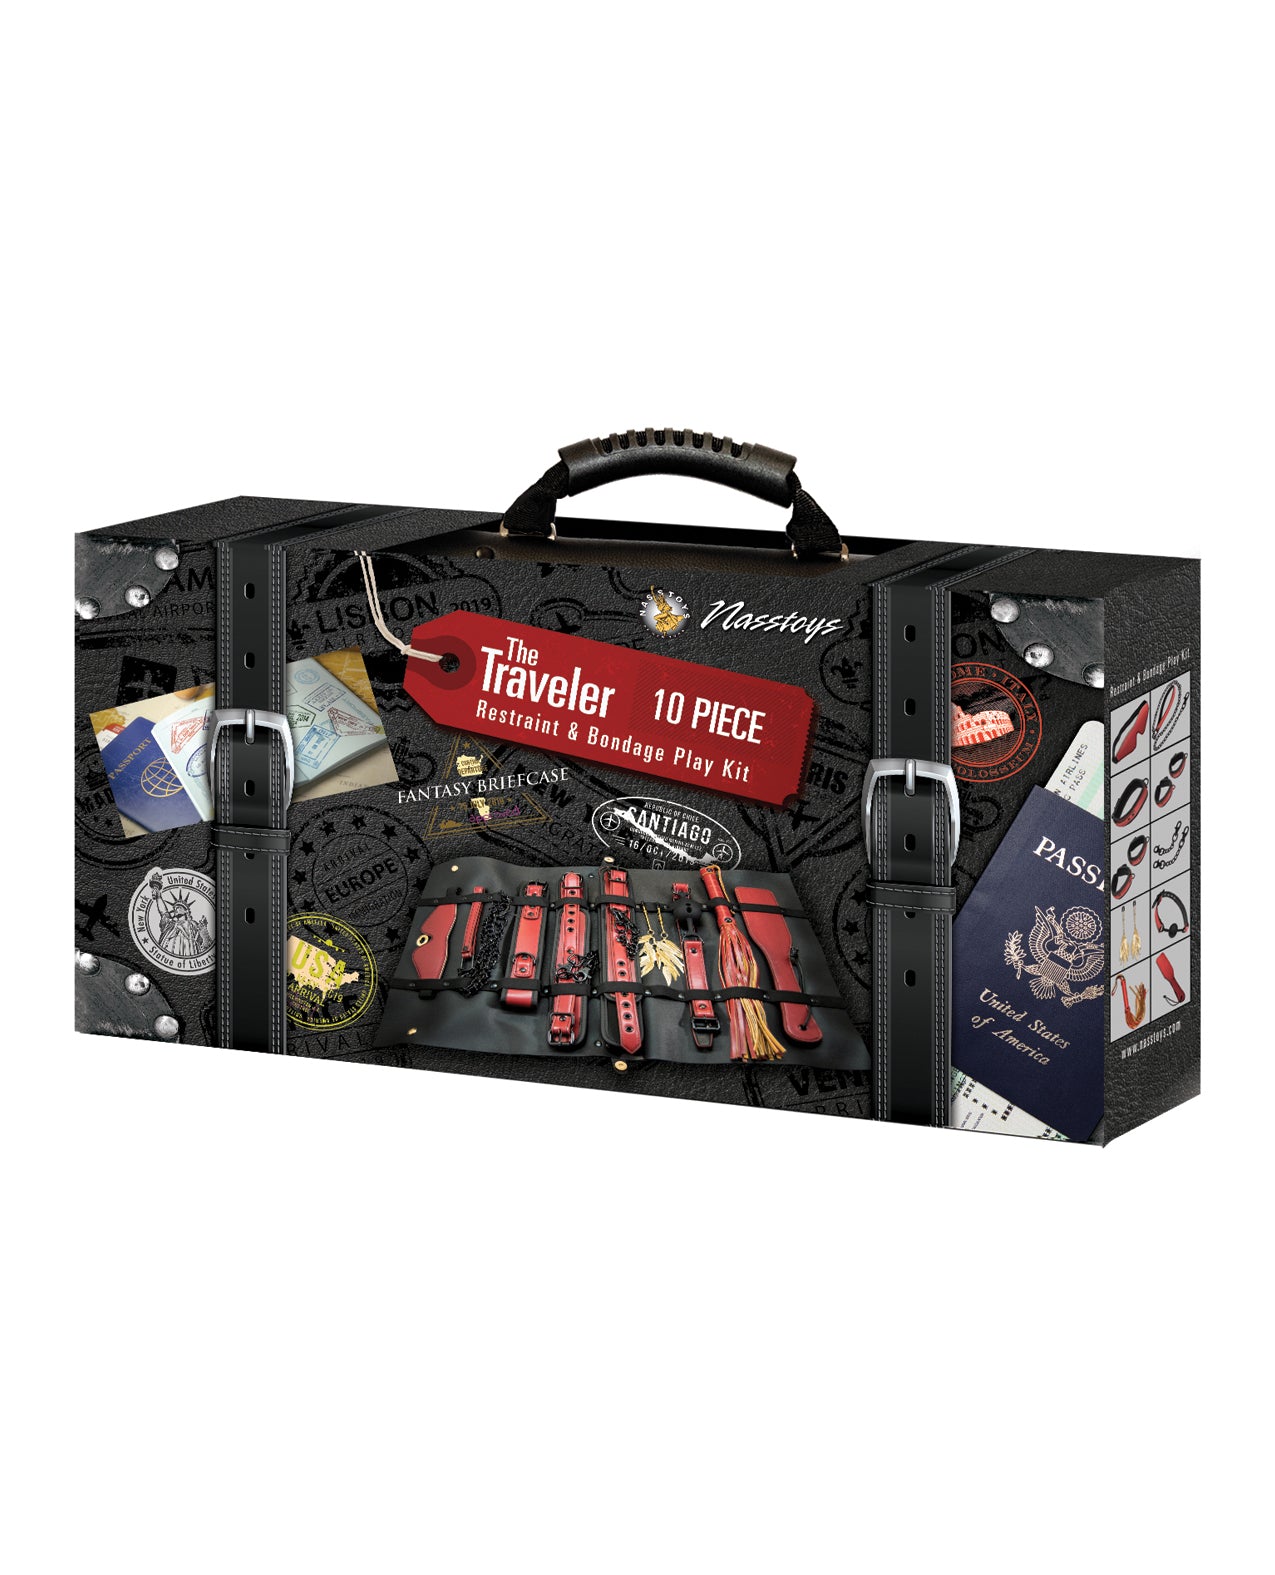 Ultimate Fantasy Briefcase Bondage Play Kit